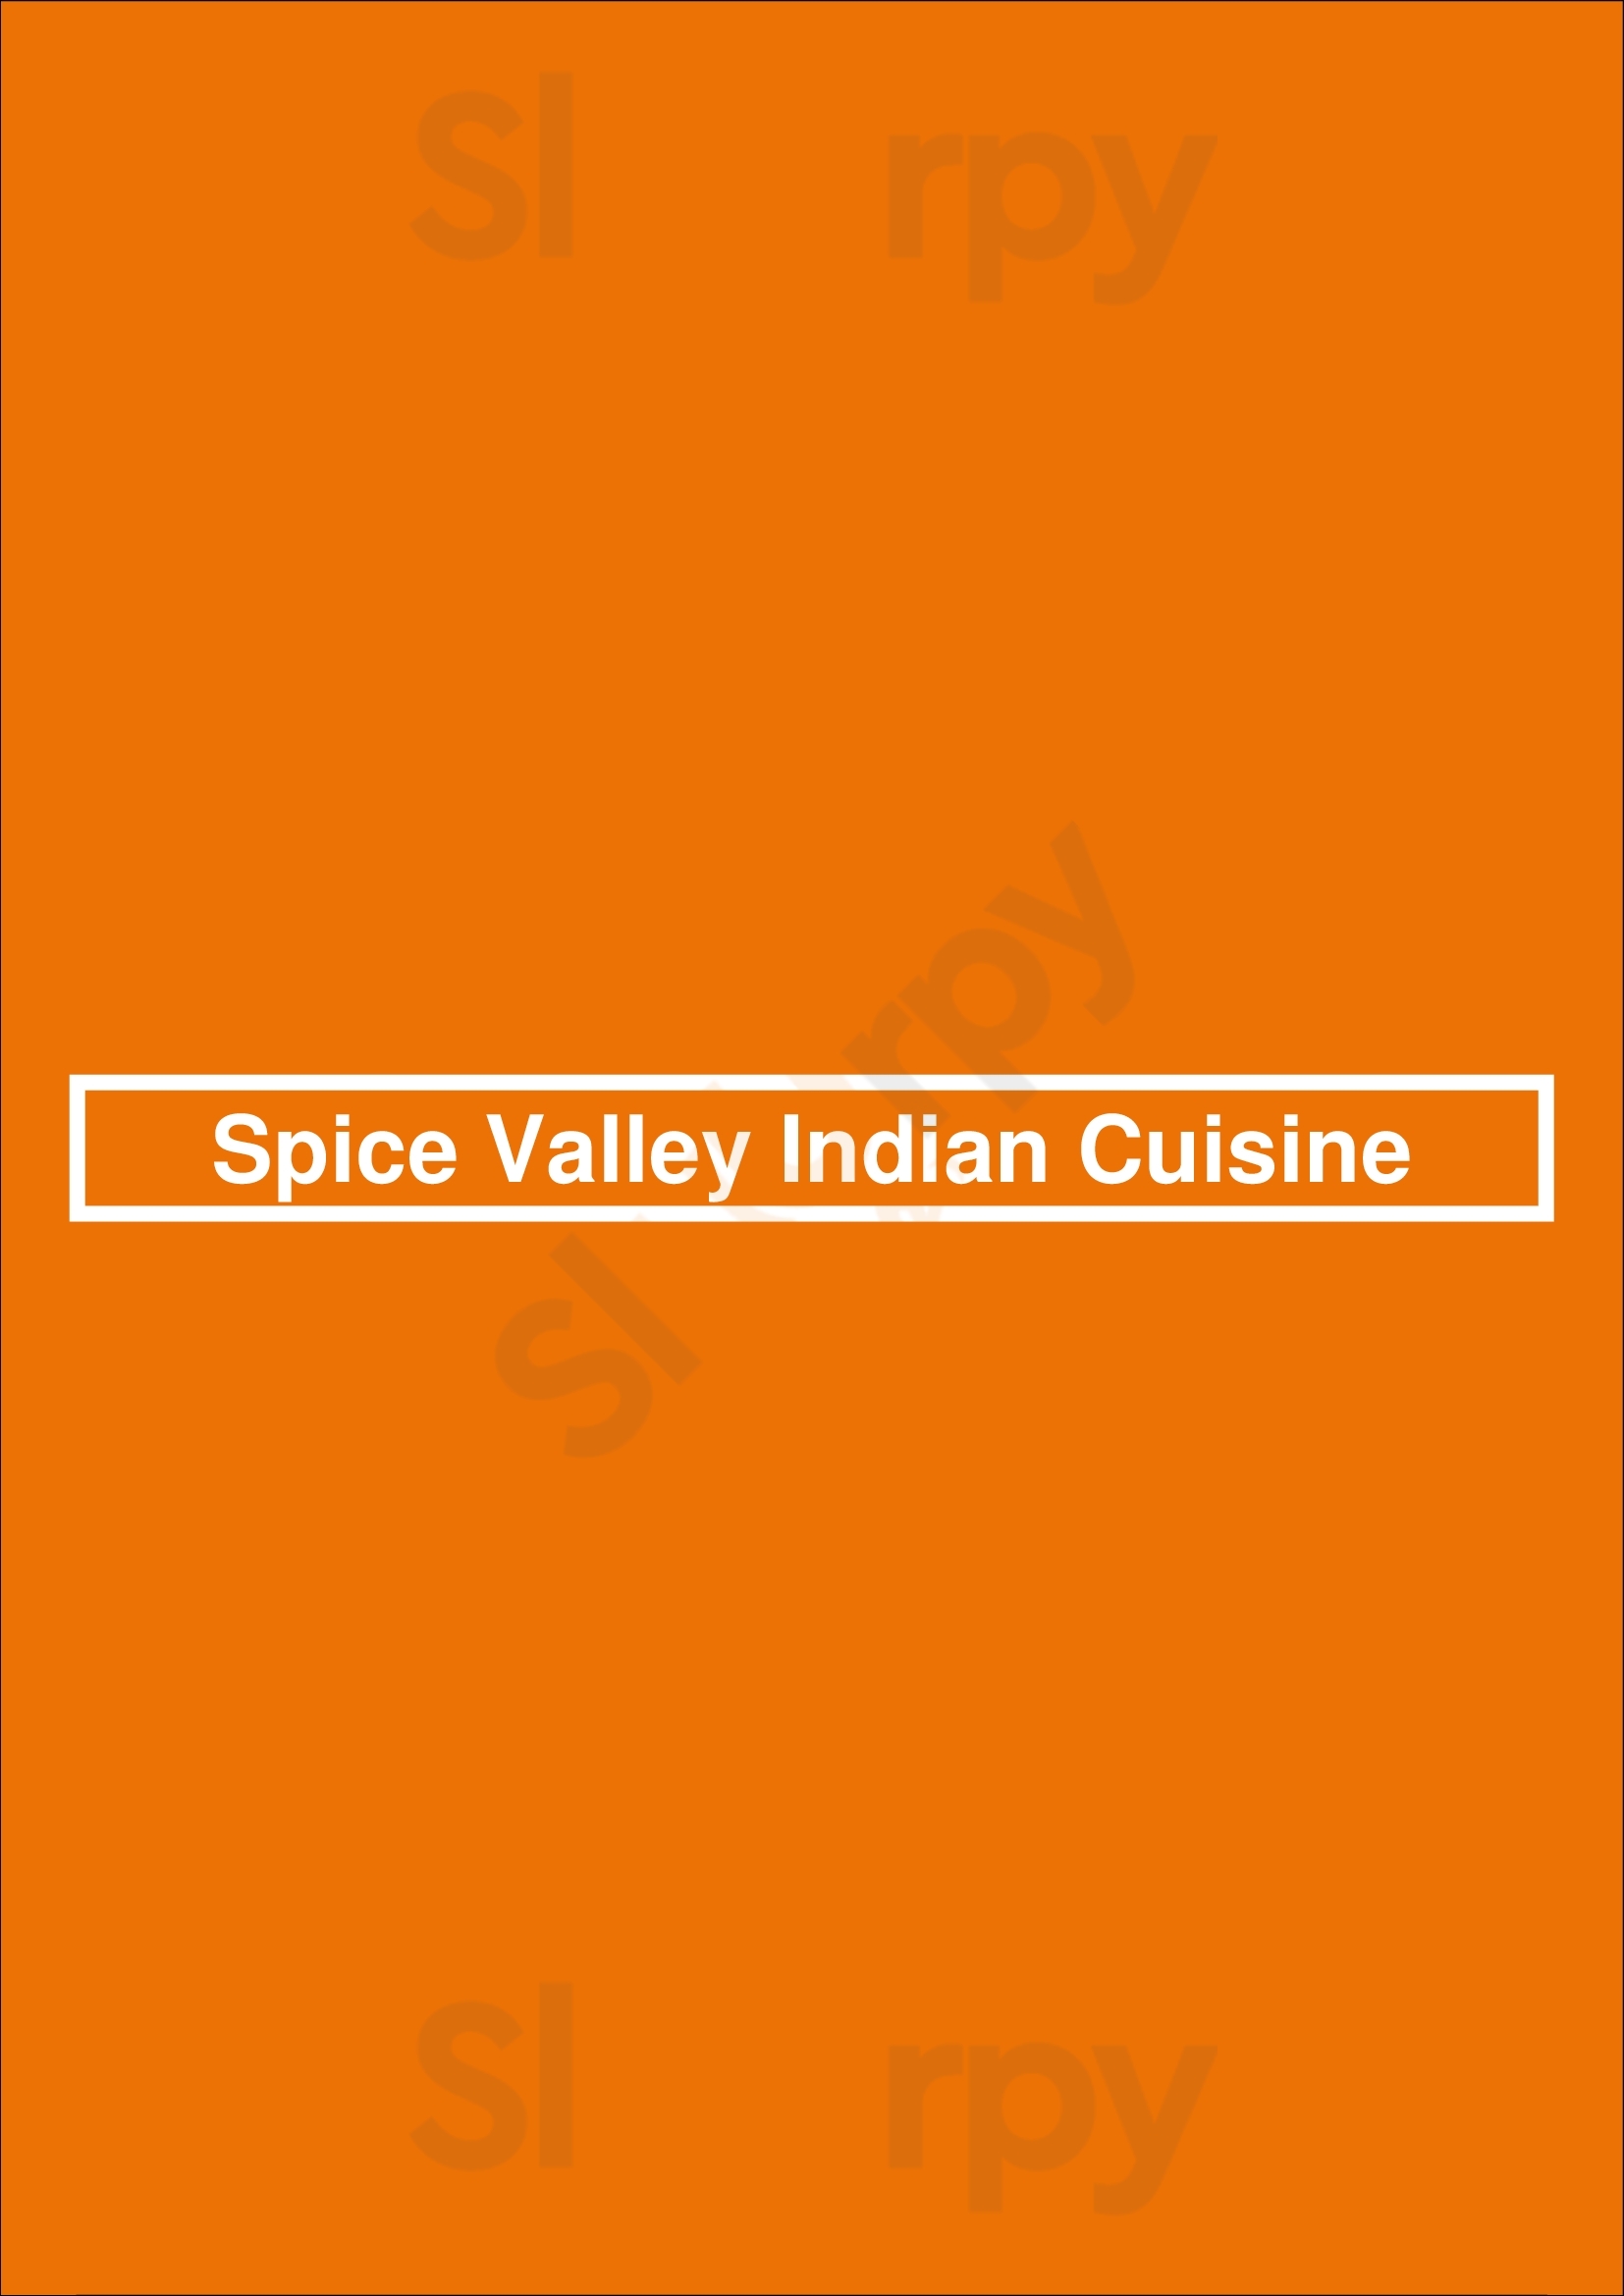 Spice Valley Indian Cuisine Victoria Capital Regional District Menu - 1